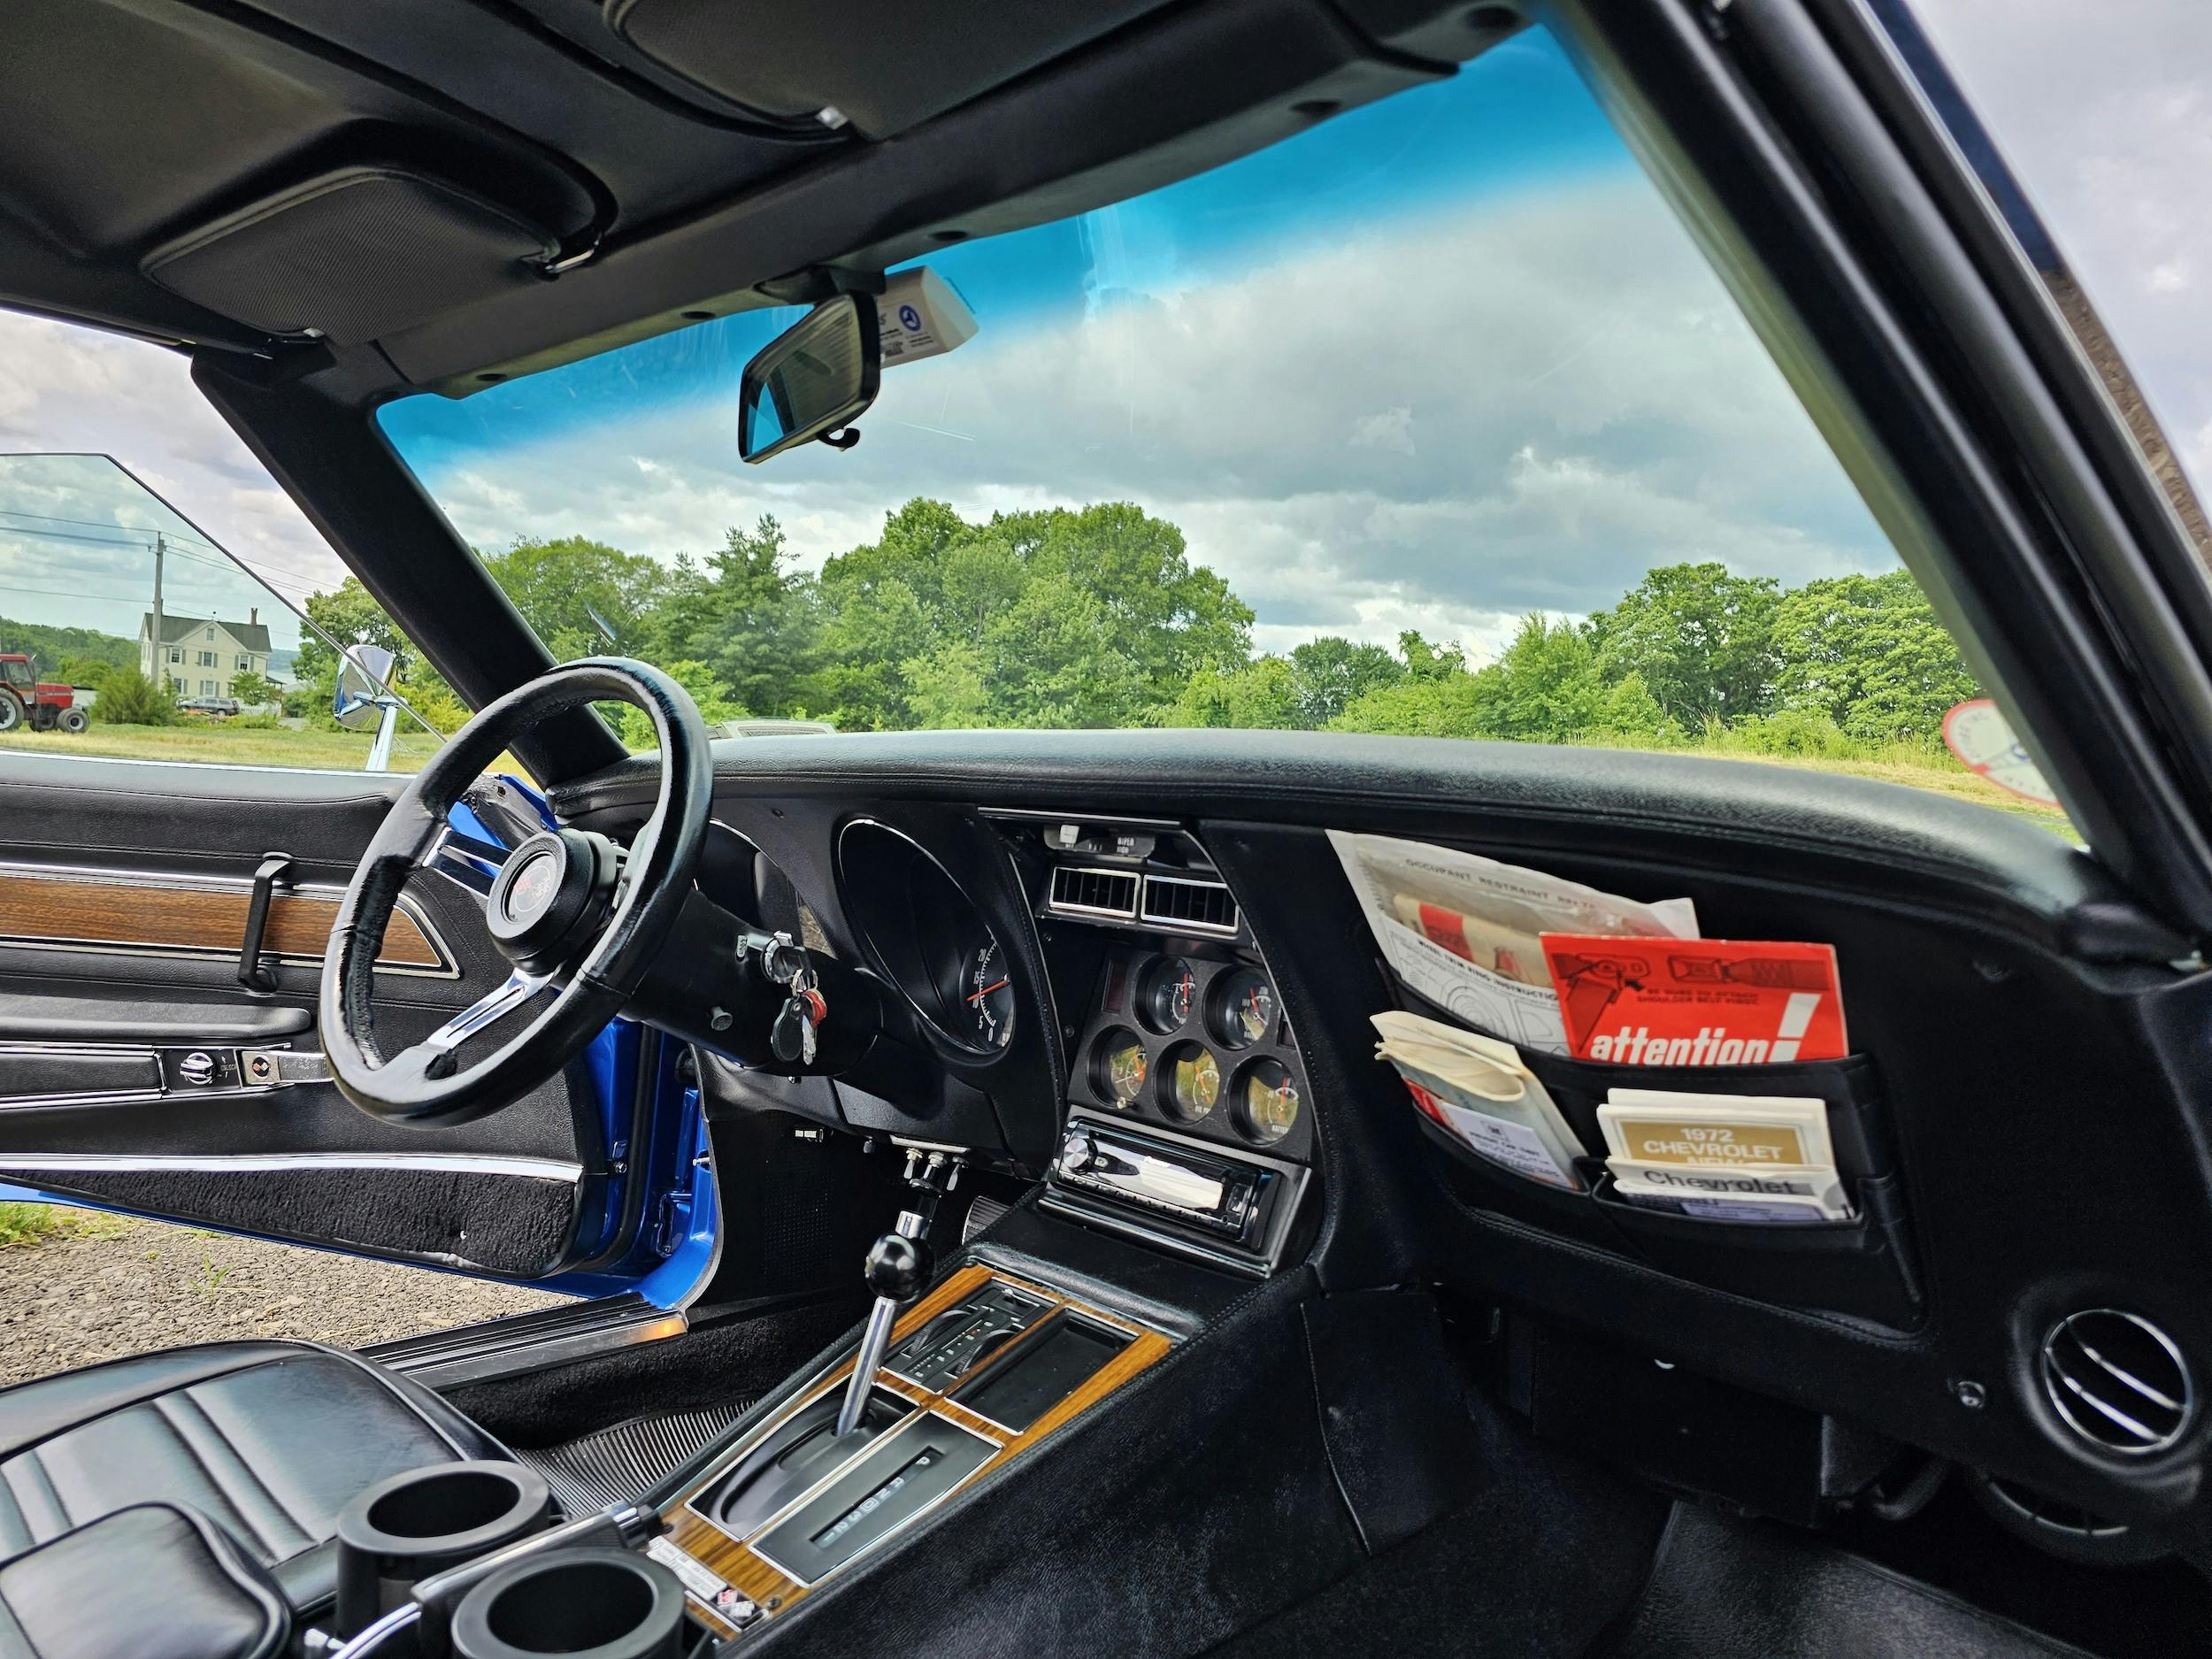 1972 Corvette Stingray interior dash